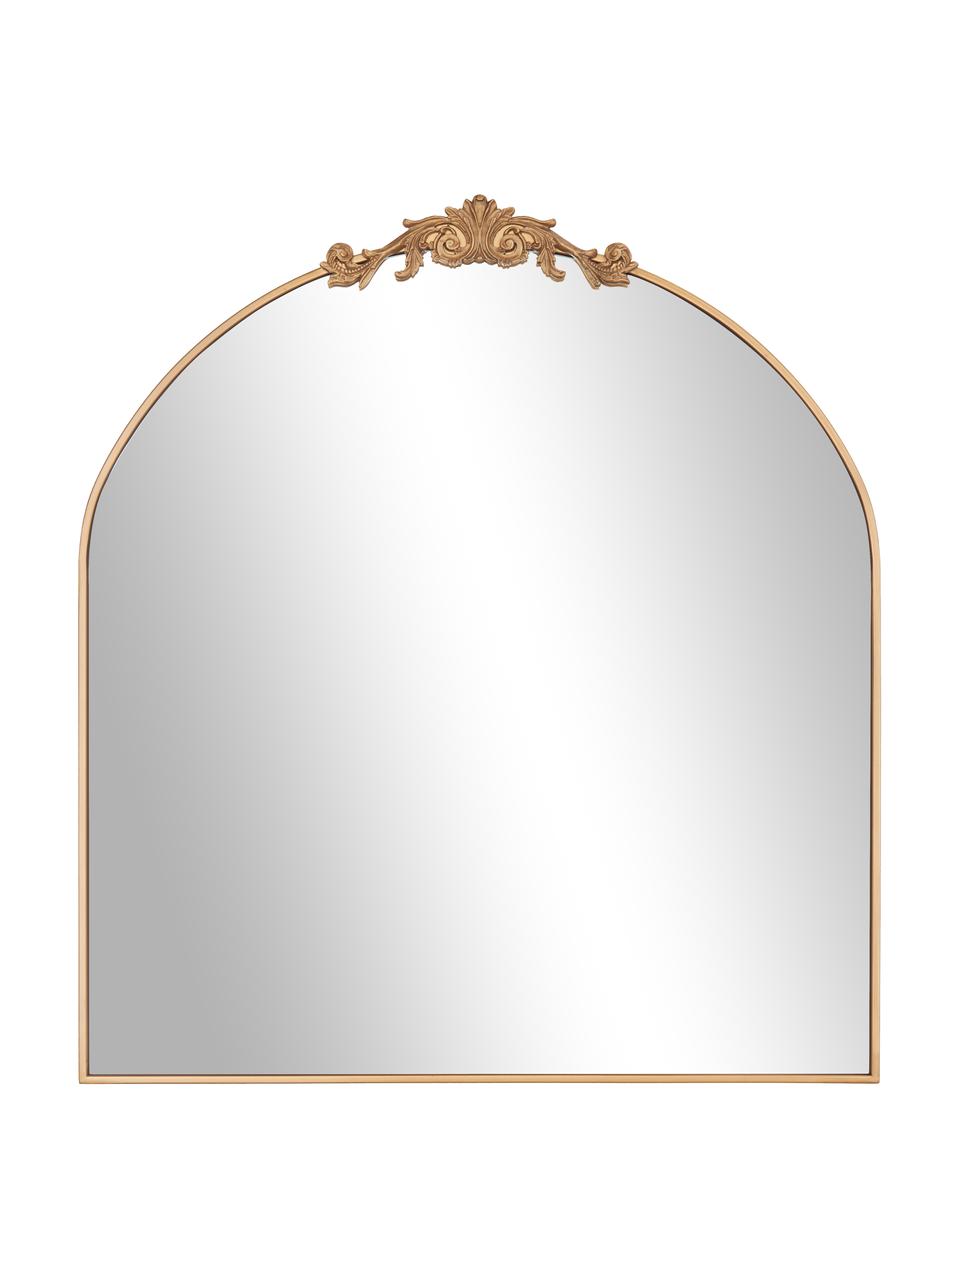 Barokní nástěnné zrcadlo Saida, Zlatá, Š 90 cm, V 100 cm